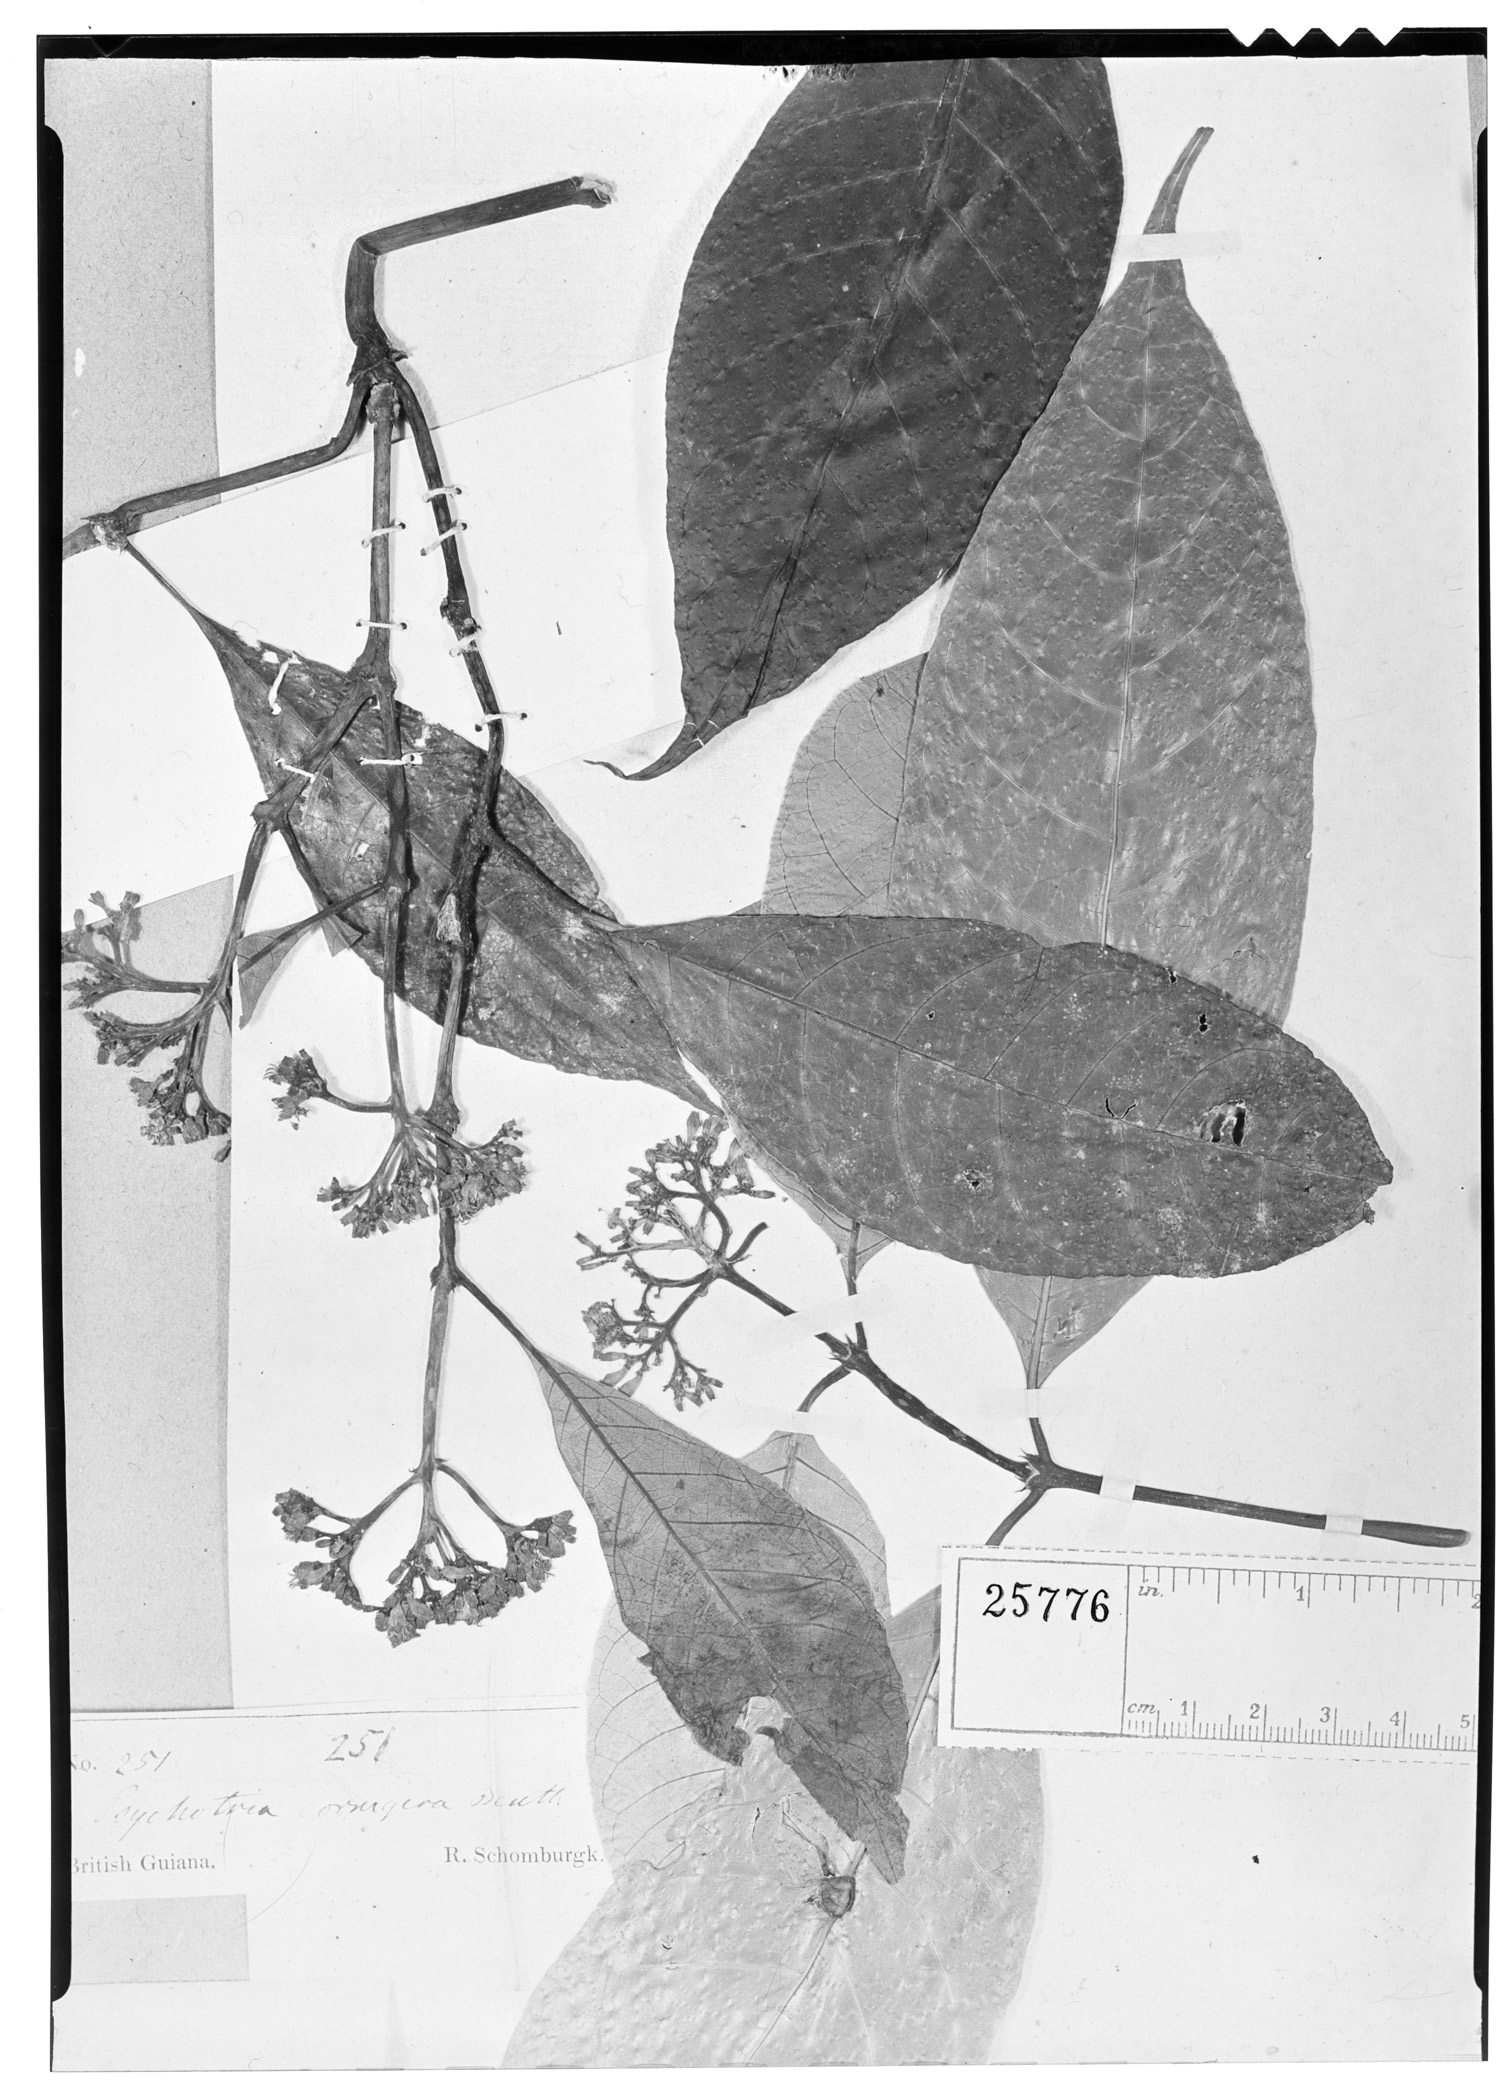 Psychotria cornigera image